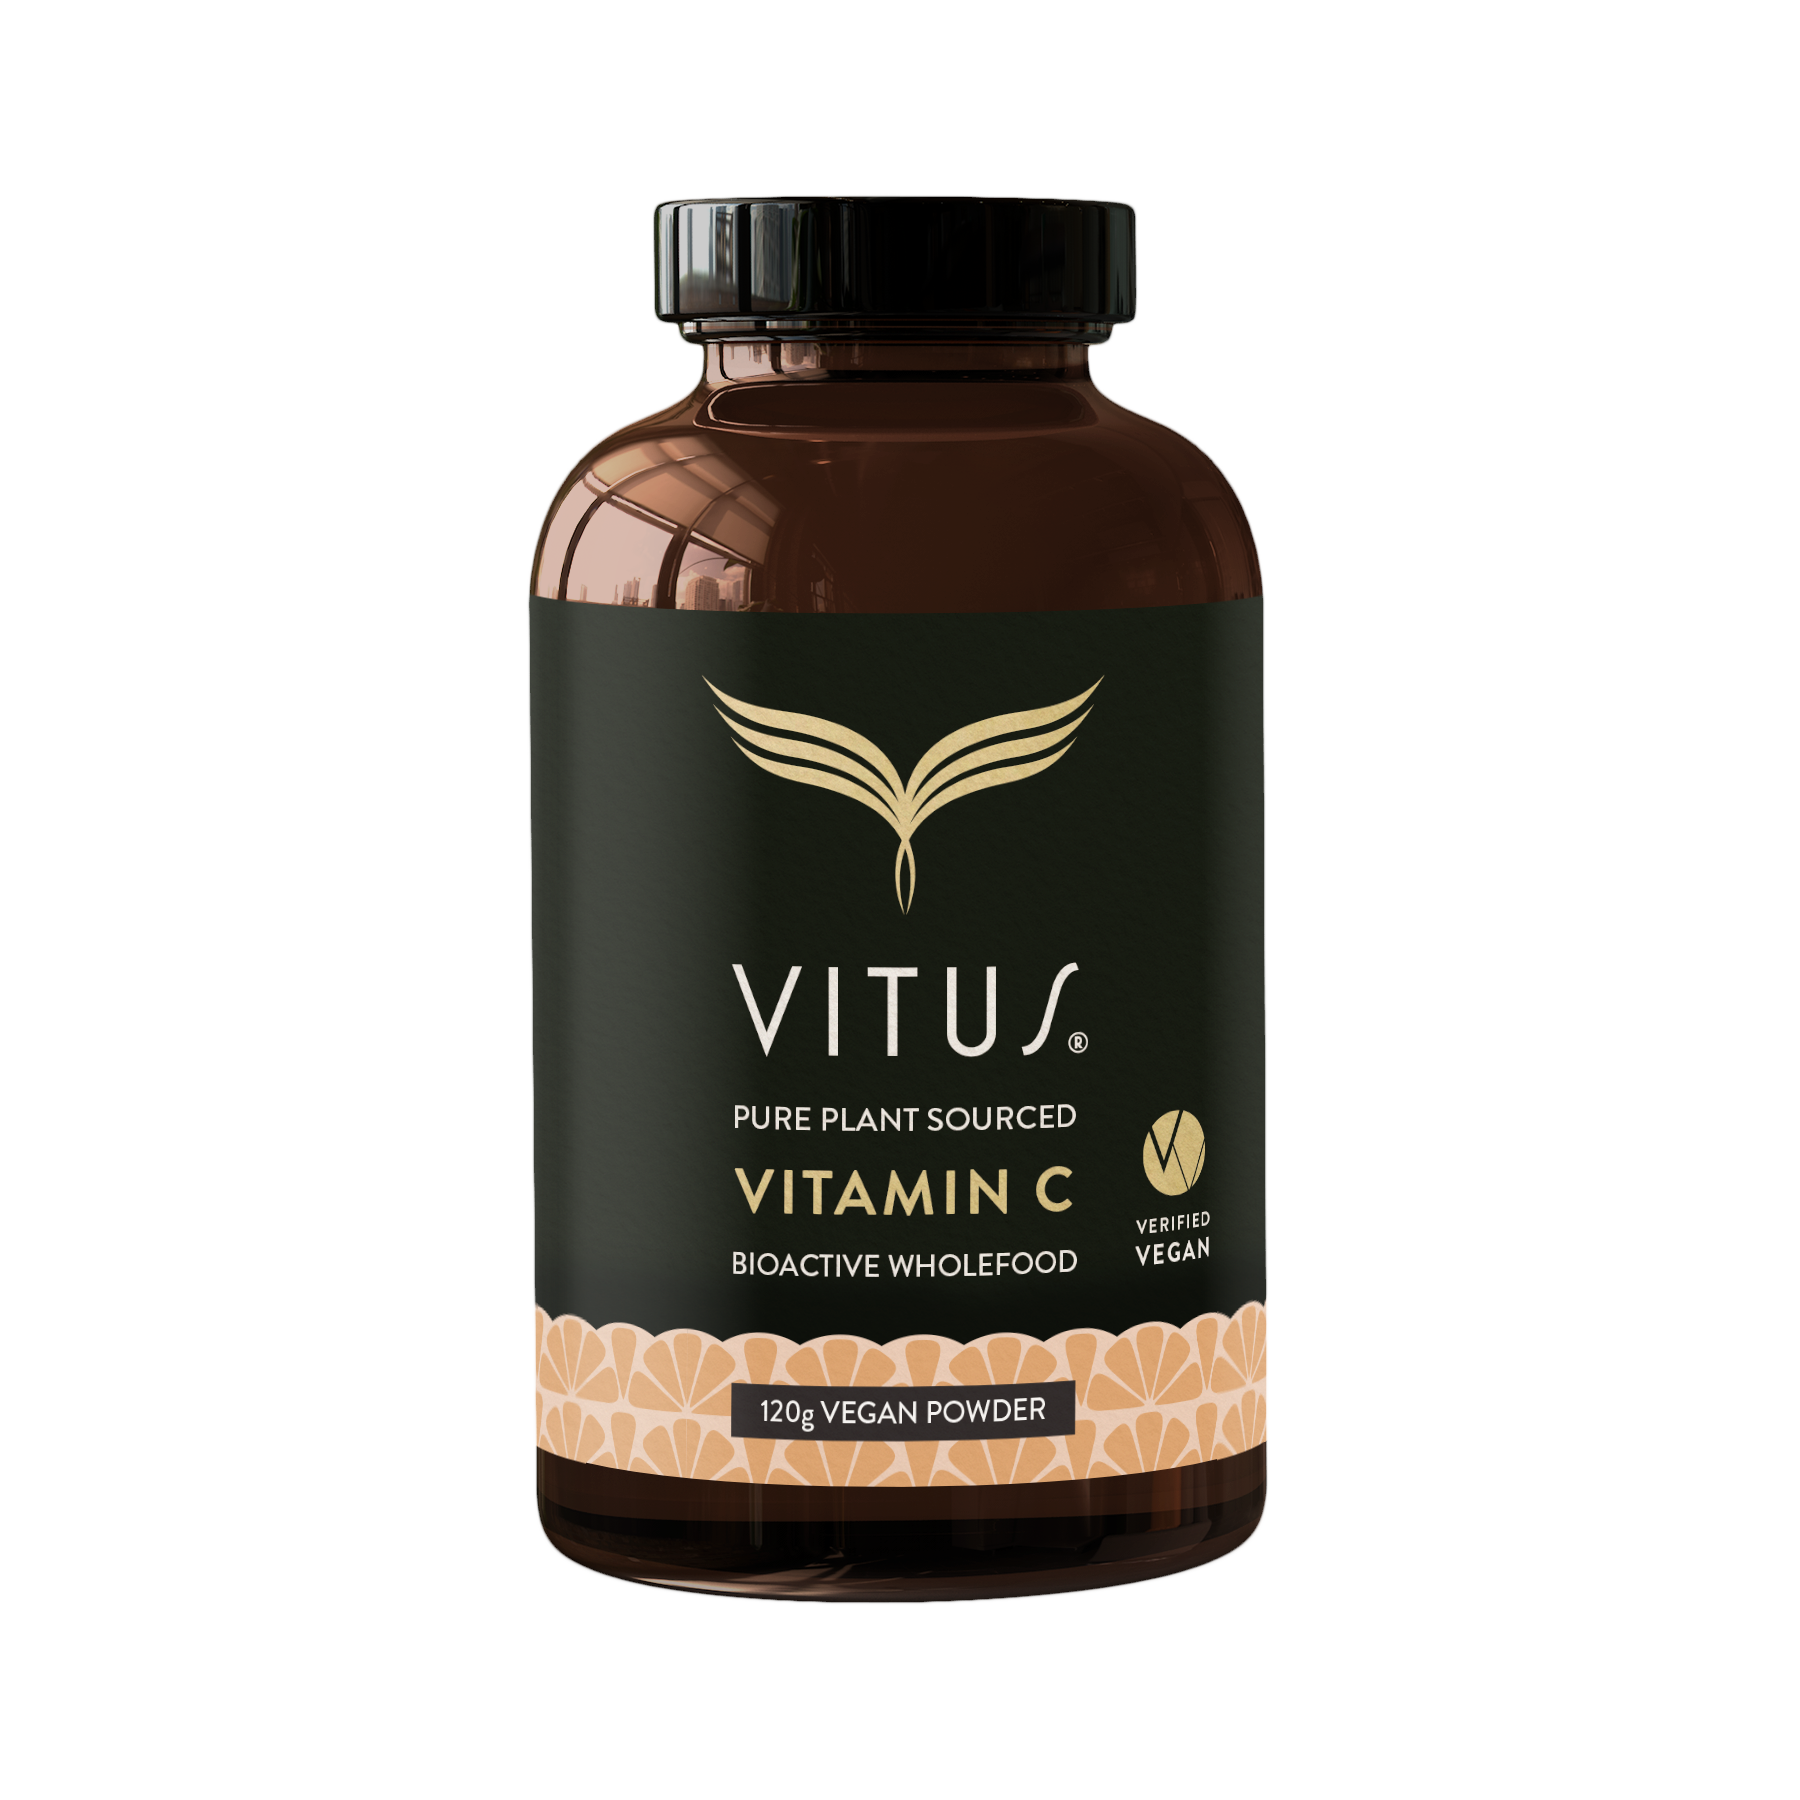 Vitus - Vitamin C Vegan Powder